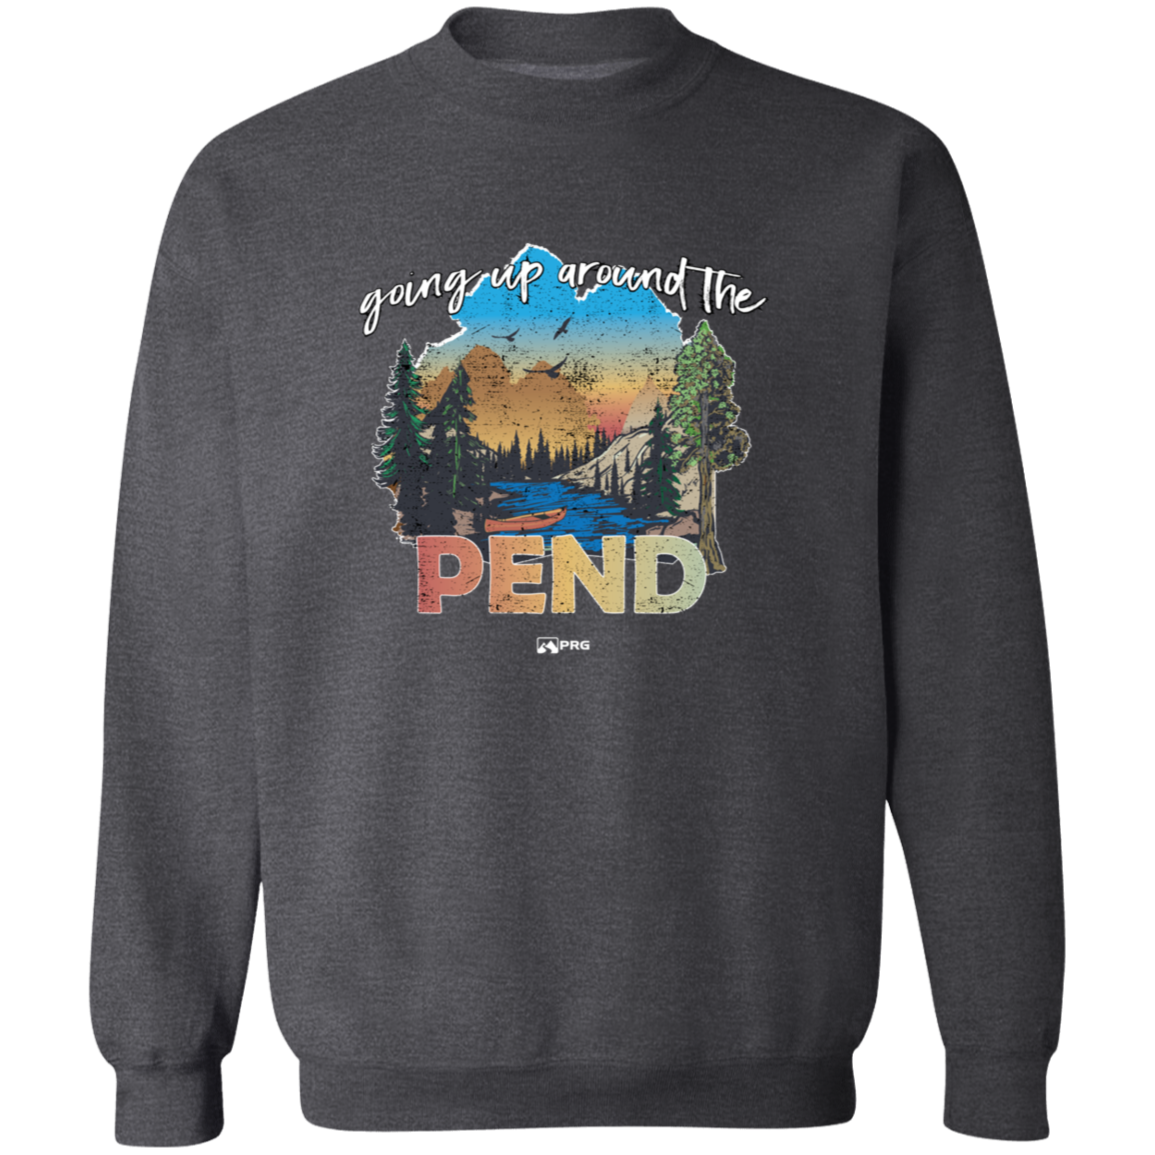 Around the Pend - Sweatshirt